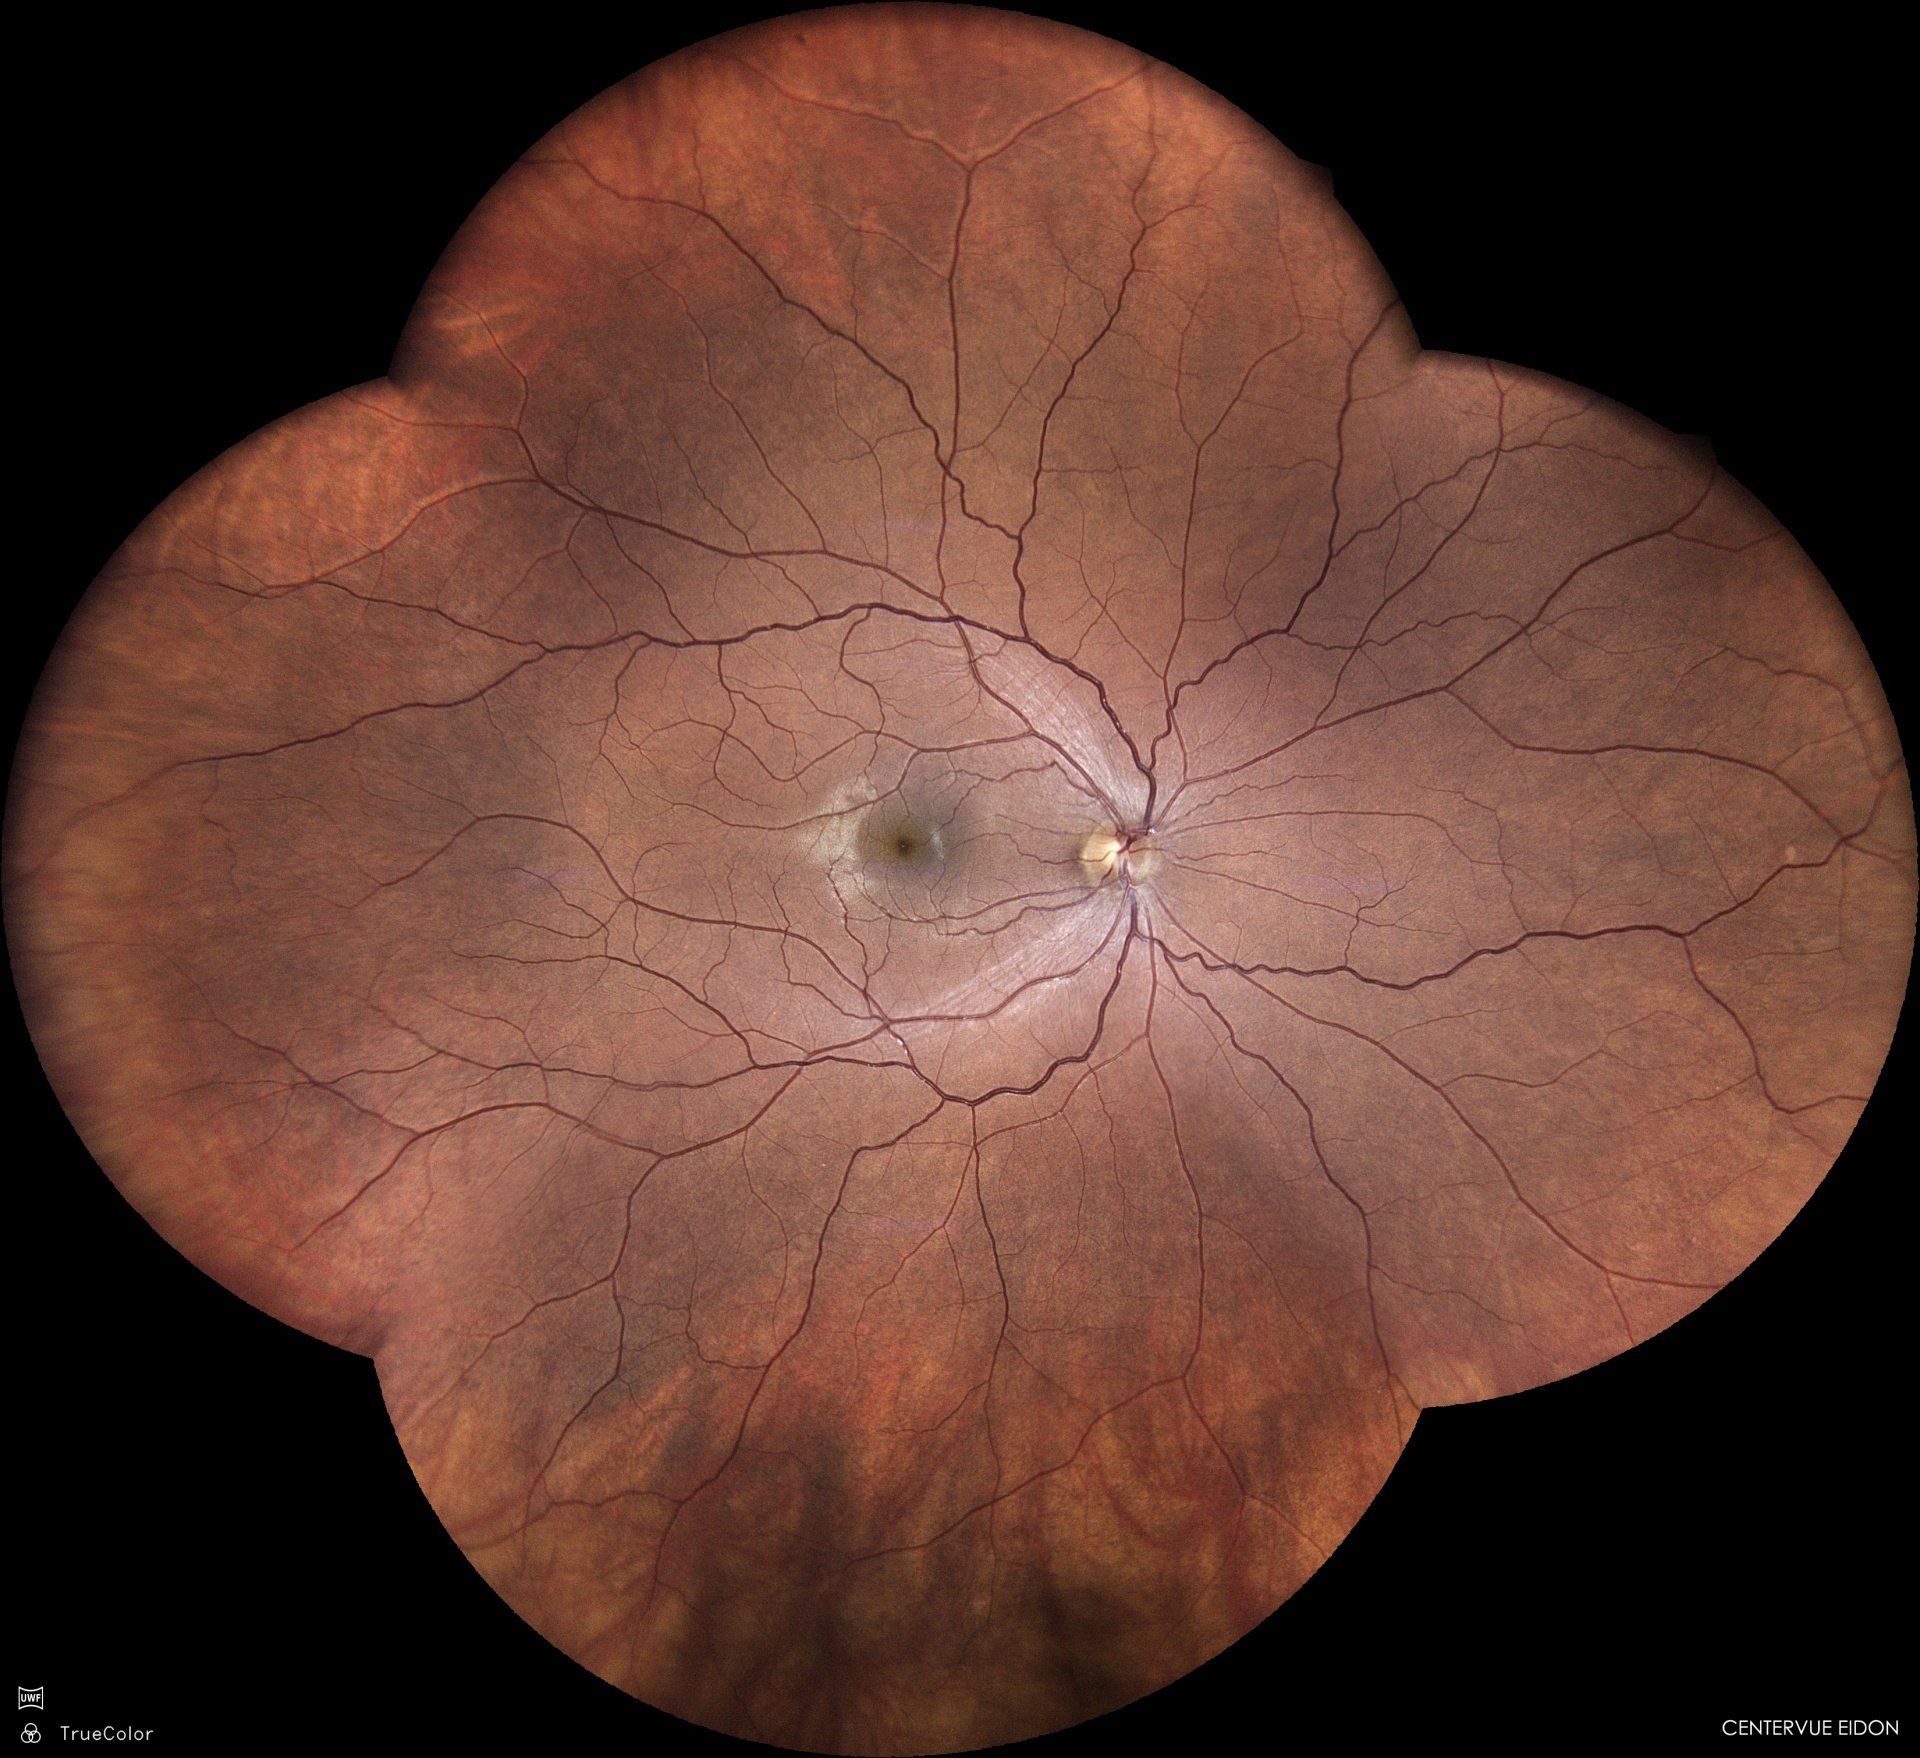 Widefield retinal image